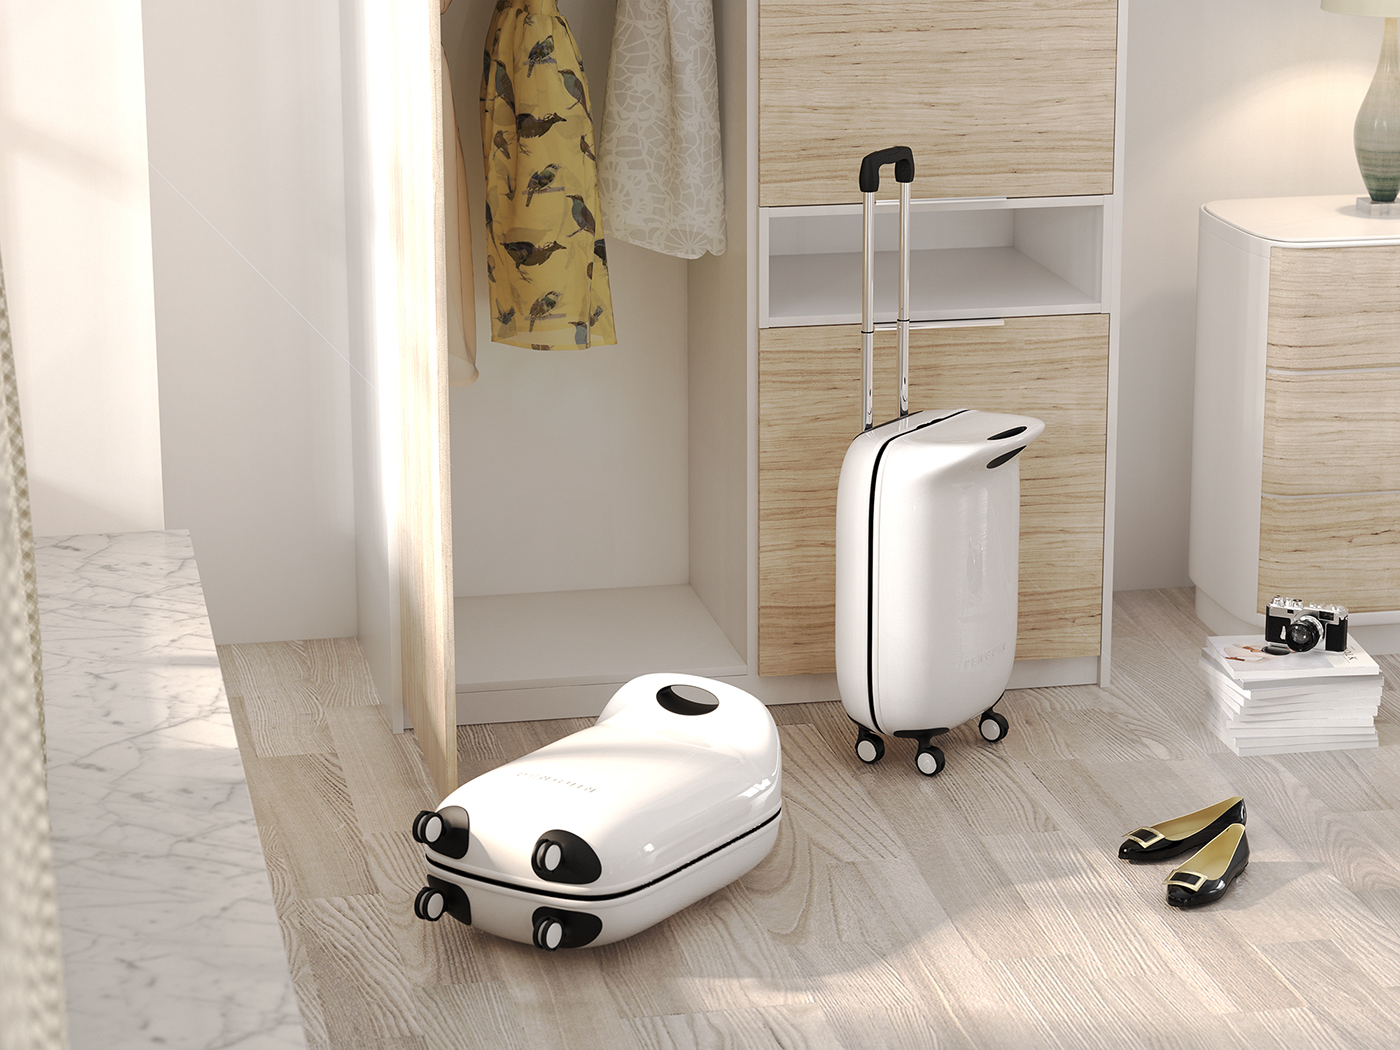 luggage bag design minimal simple living objet idea White interaction